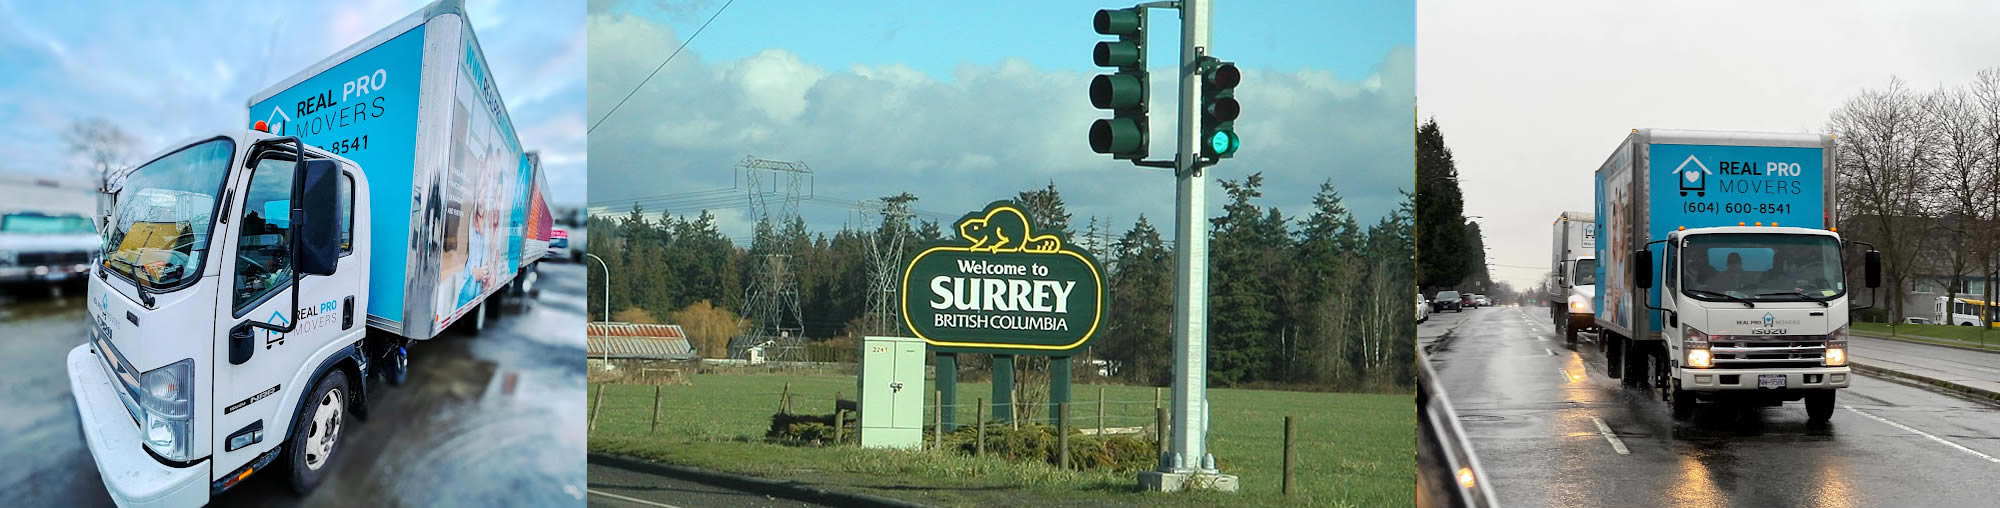 Moving company in Surrey British Columbia